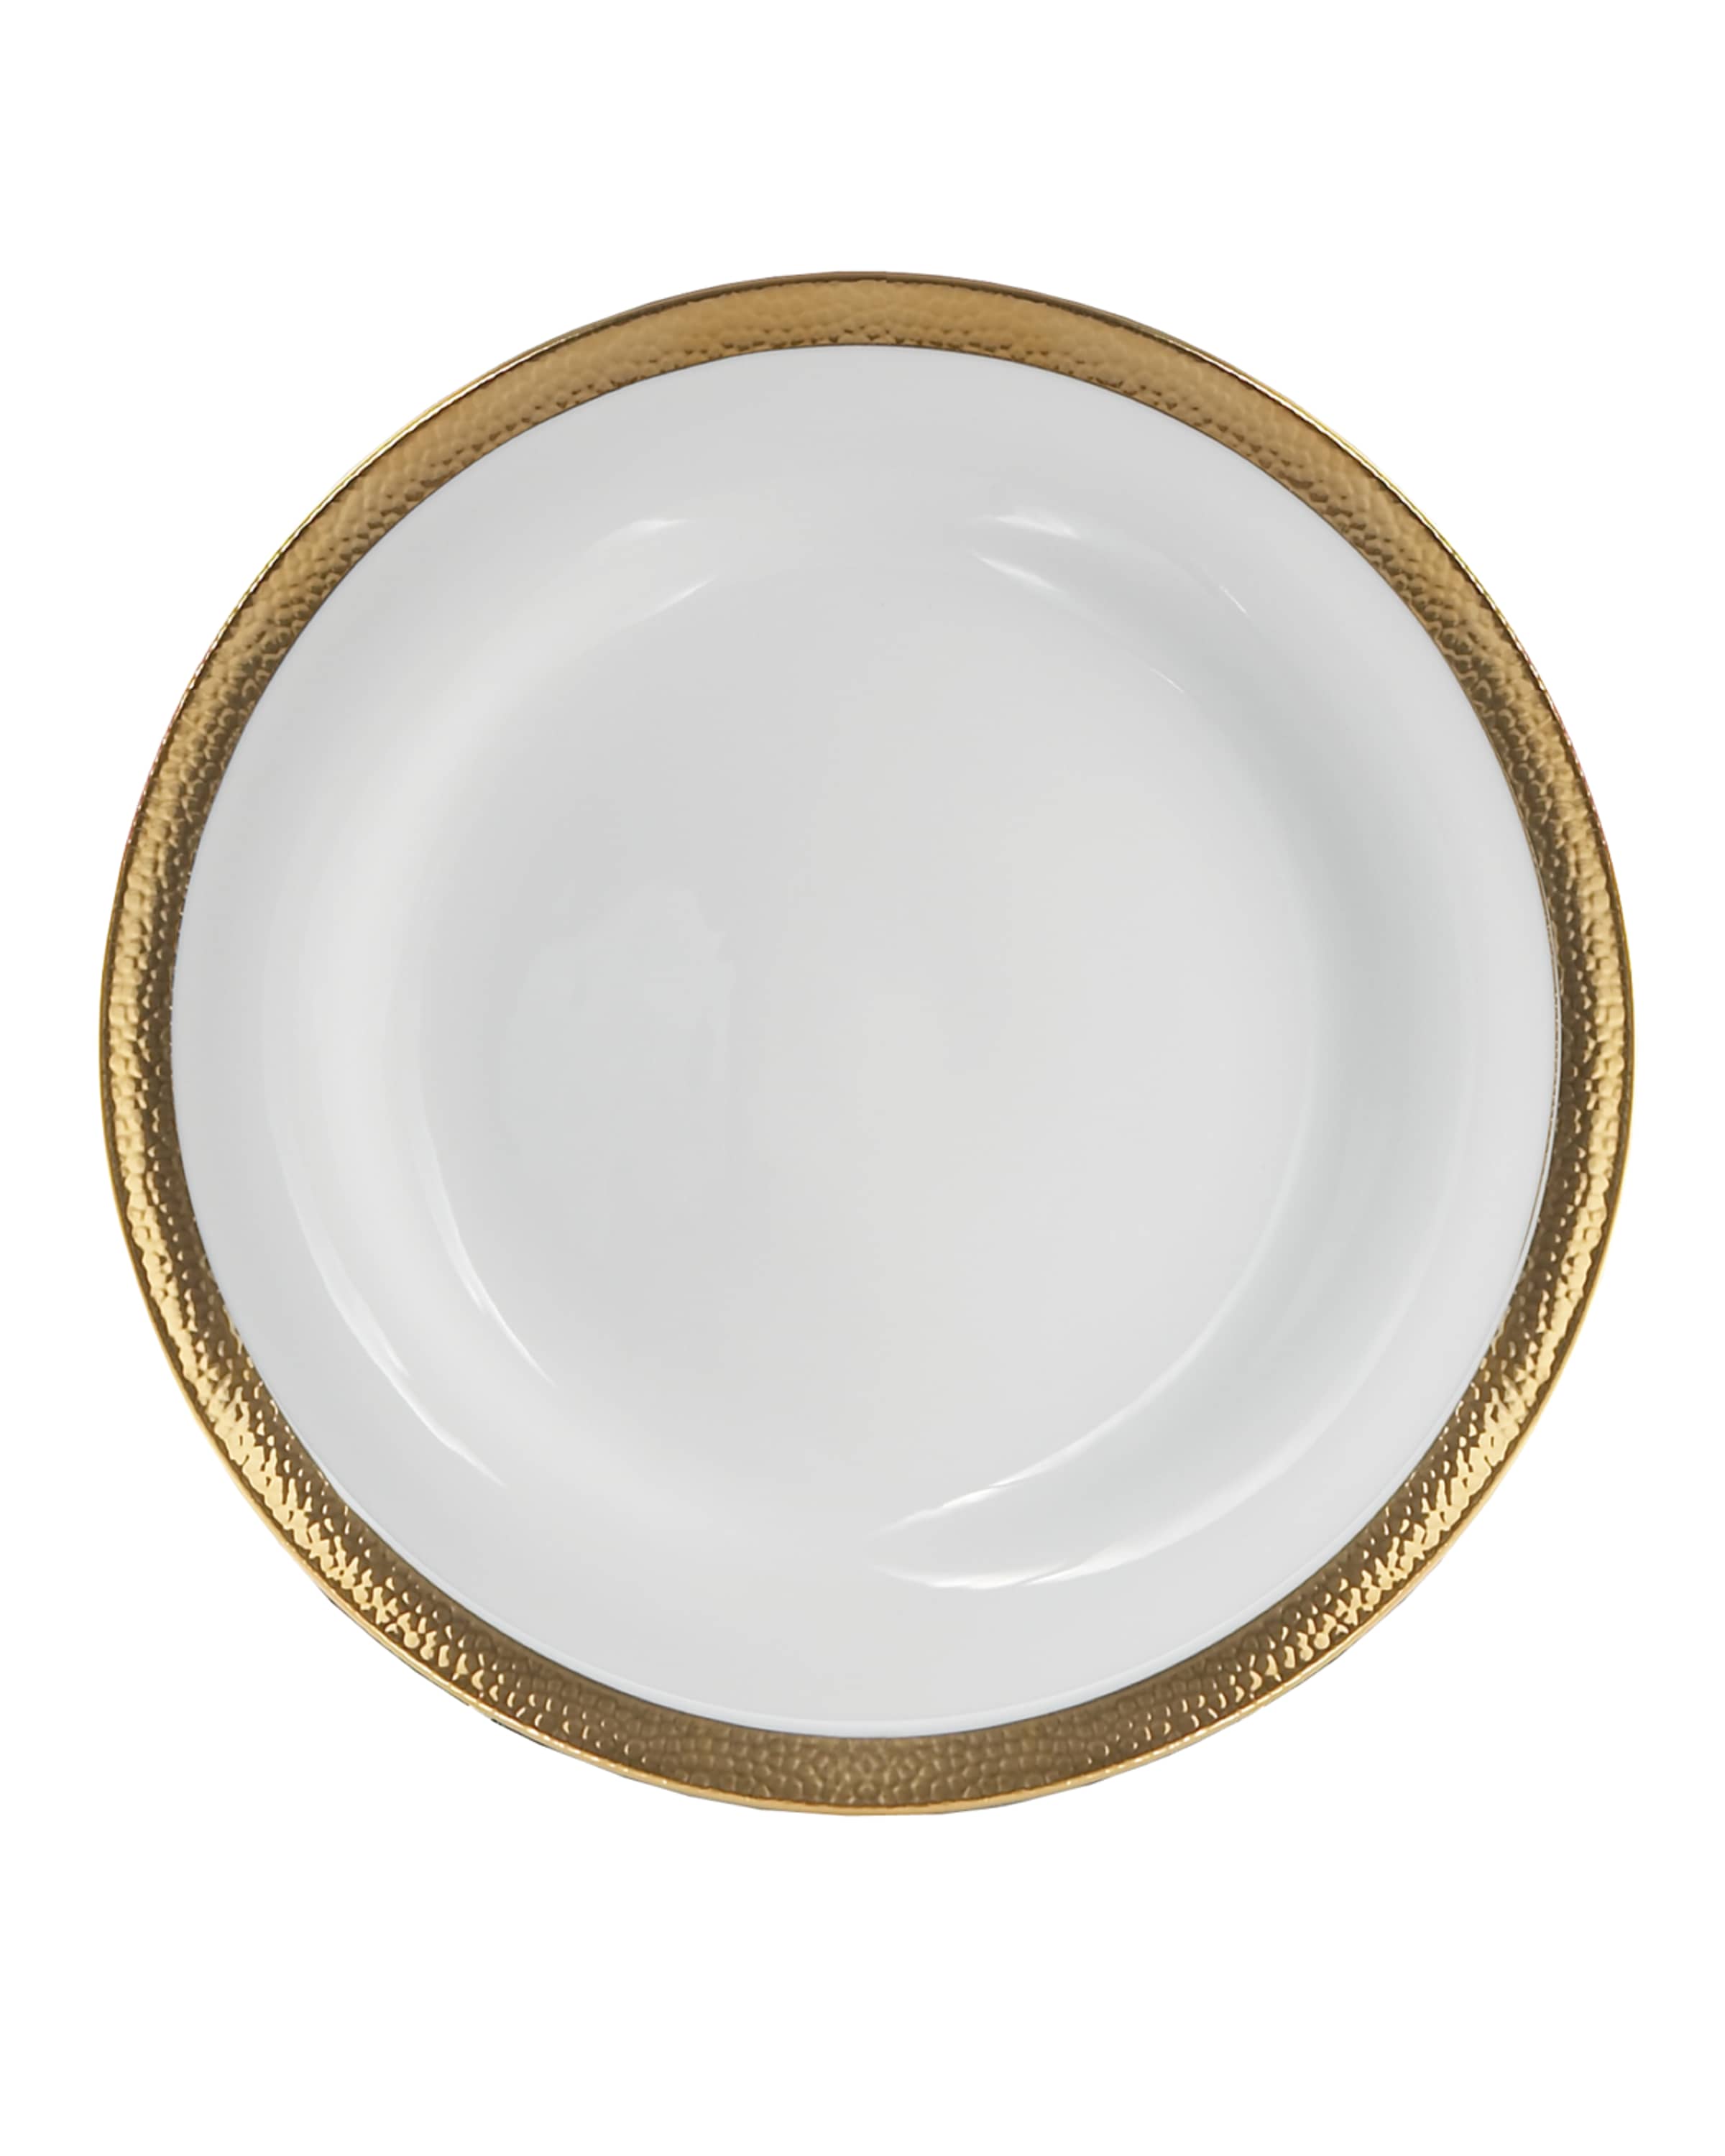 Michael Aram Goldsmith Salad Plate